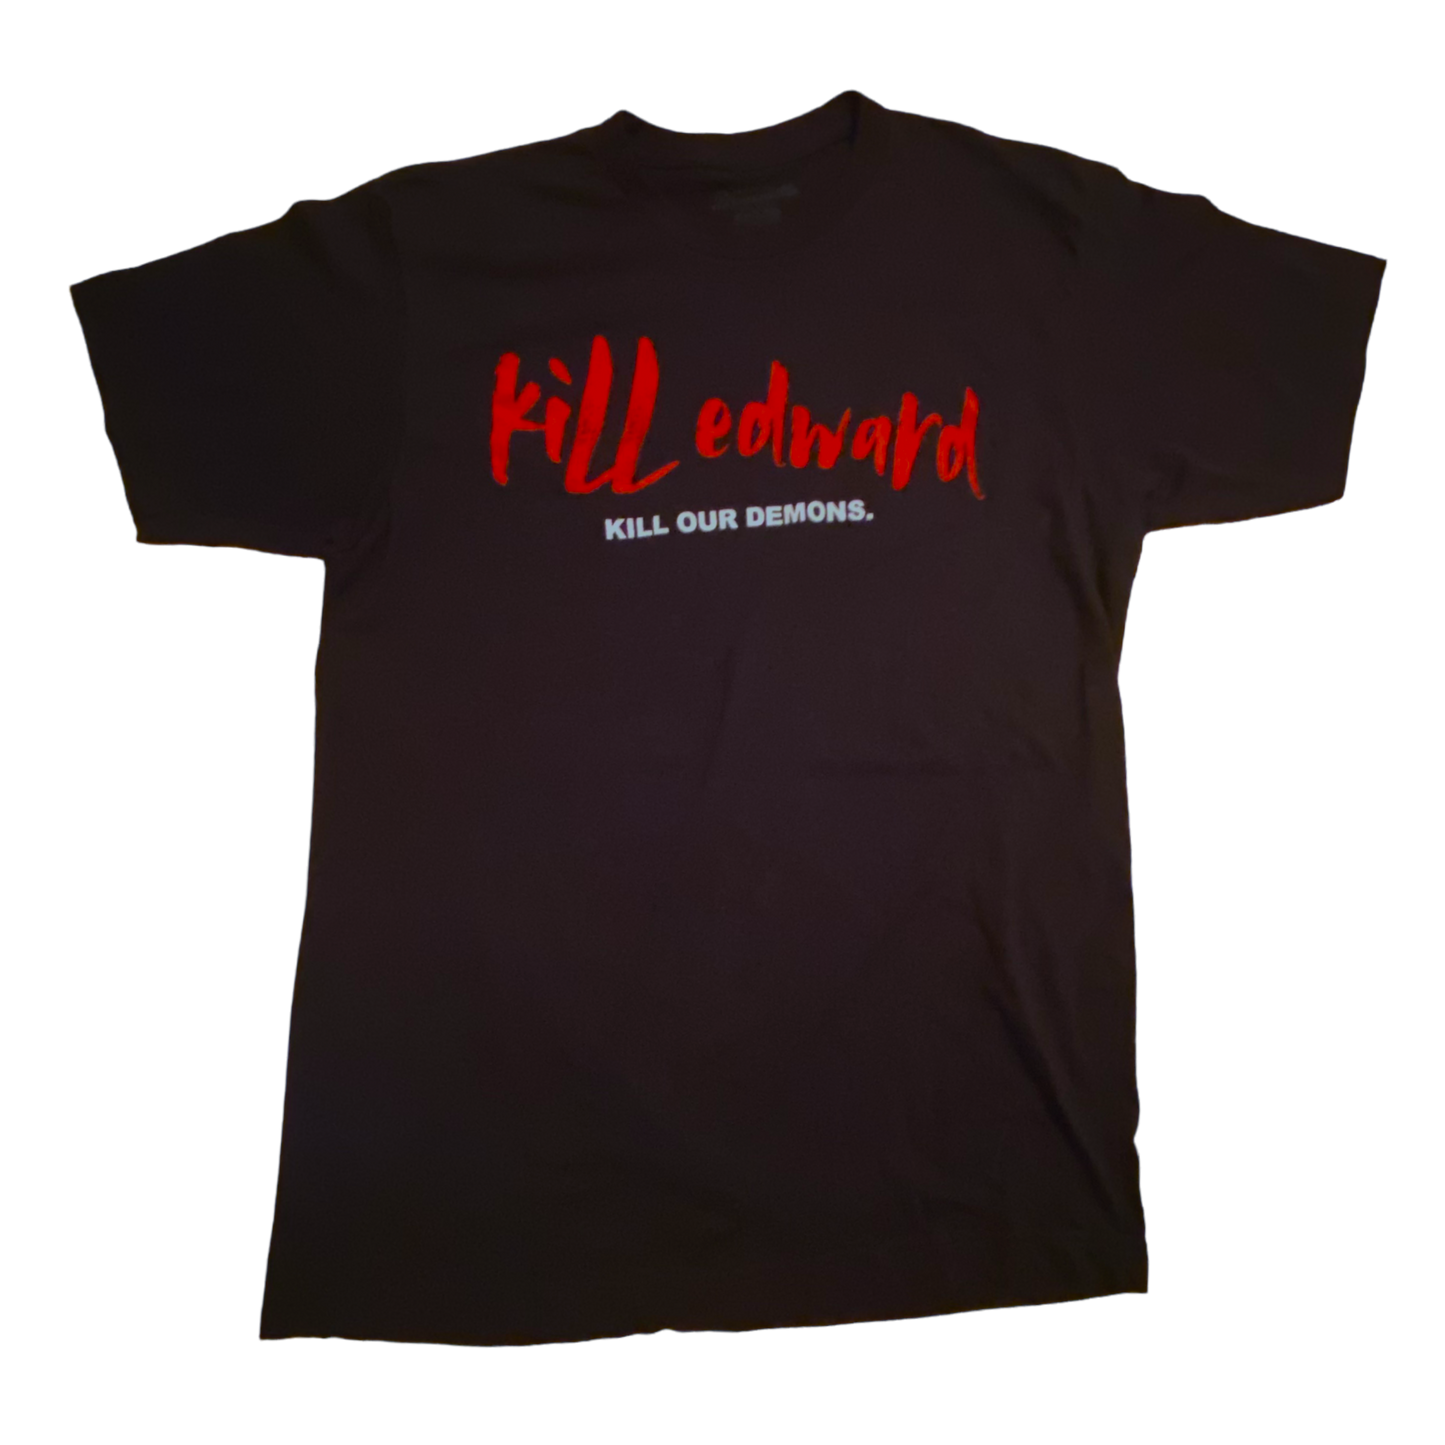 Dreamville - Kill Edward Graphic Black T-Shirt